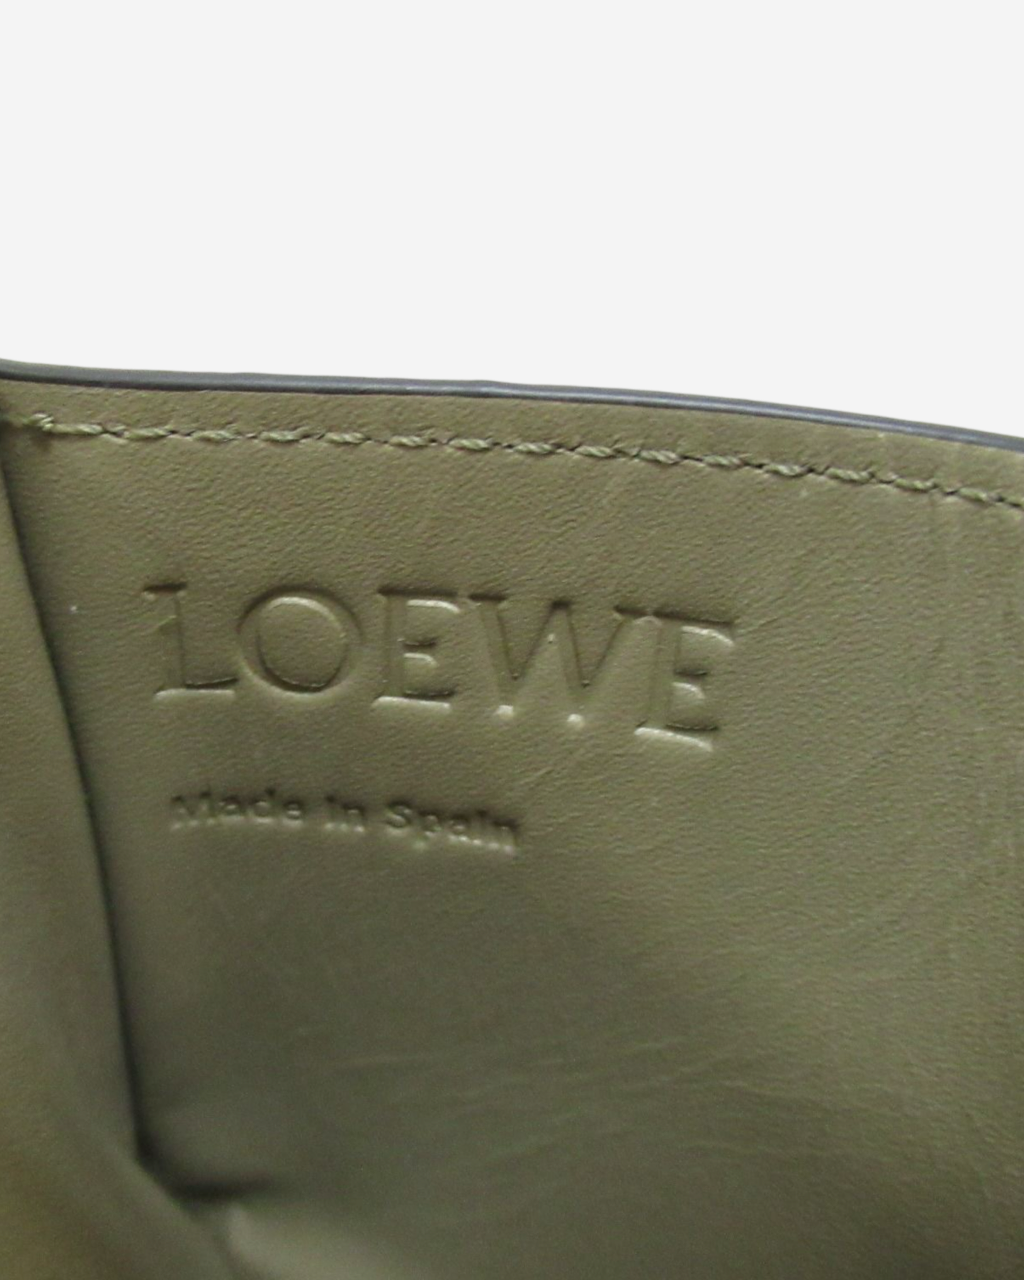 Loewe card holder